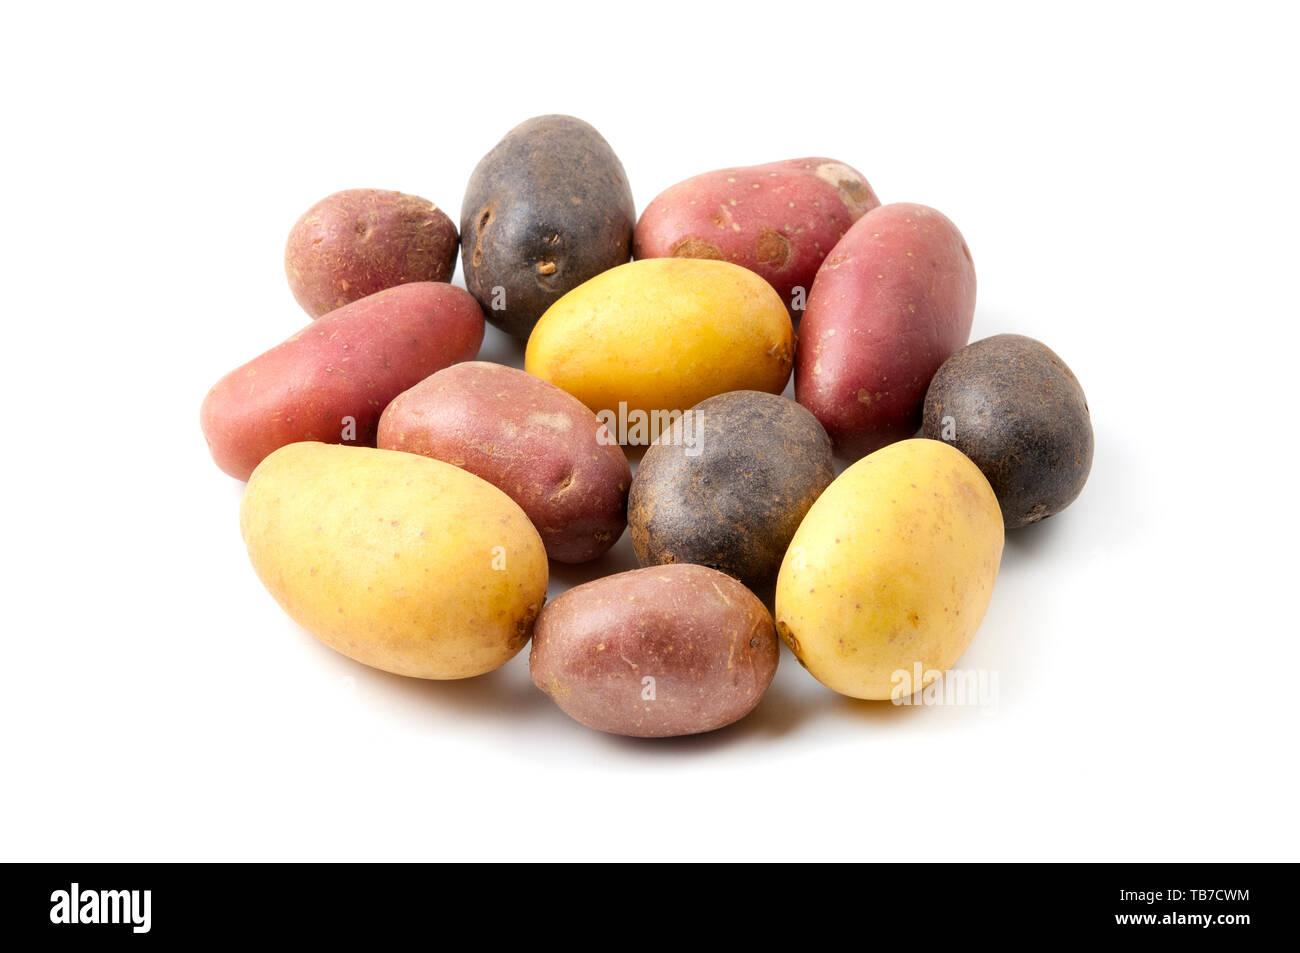 Potatoes with different pigmentation (Solanum tuberosum) on a white background Stock Photo